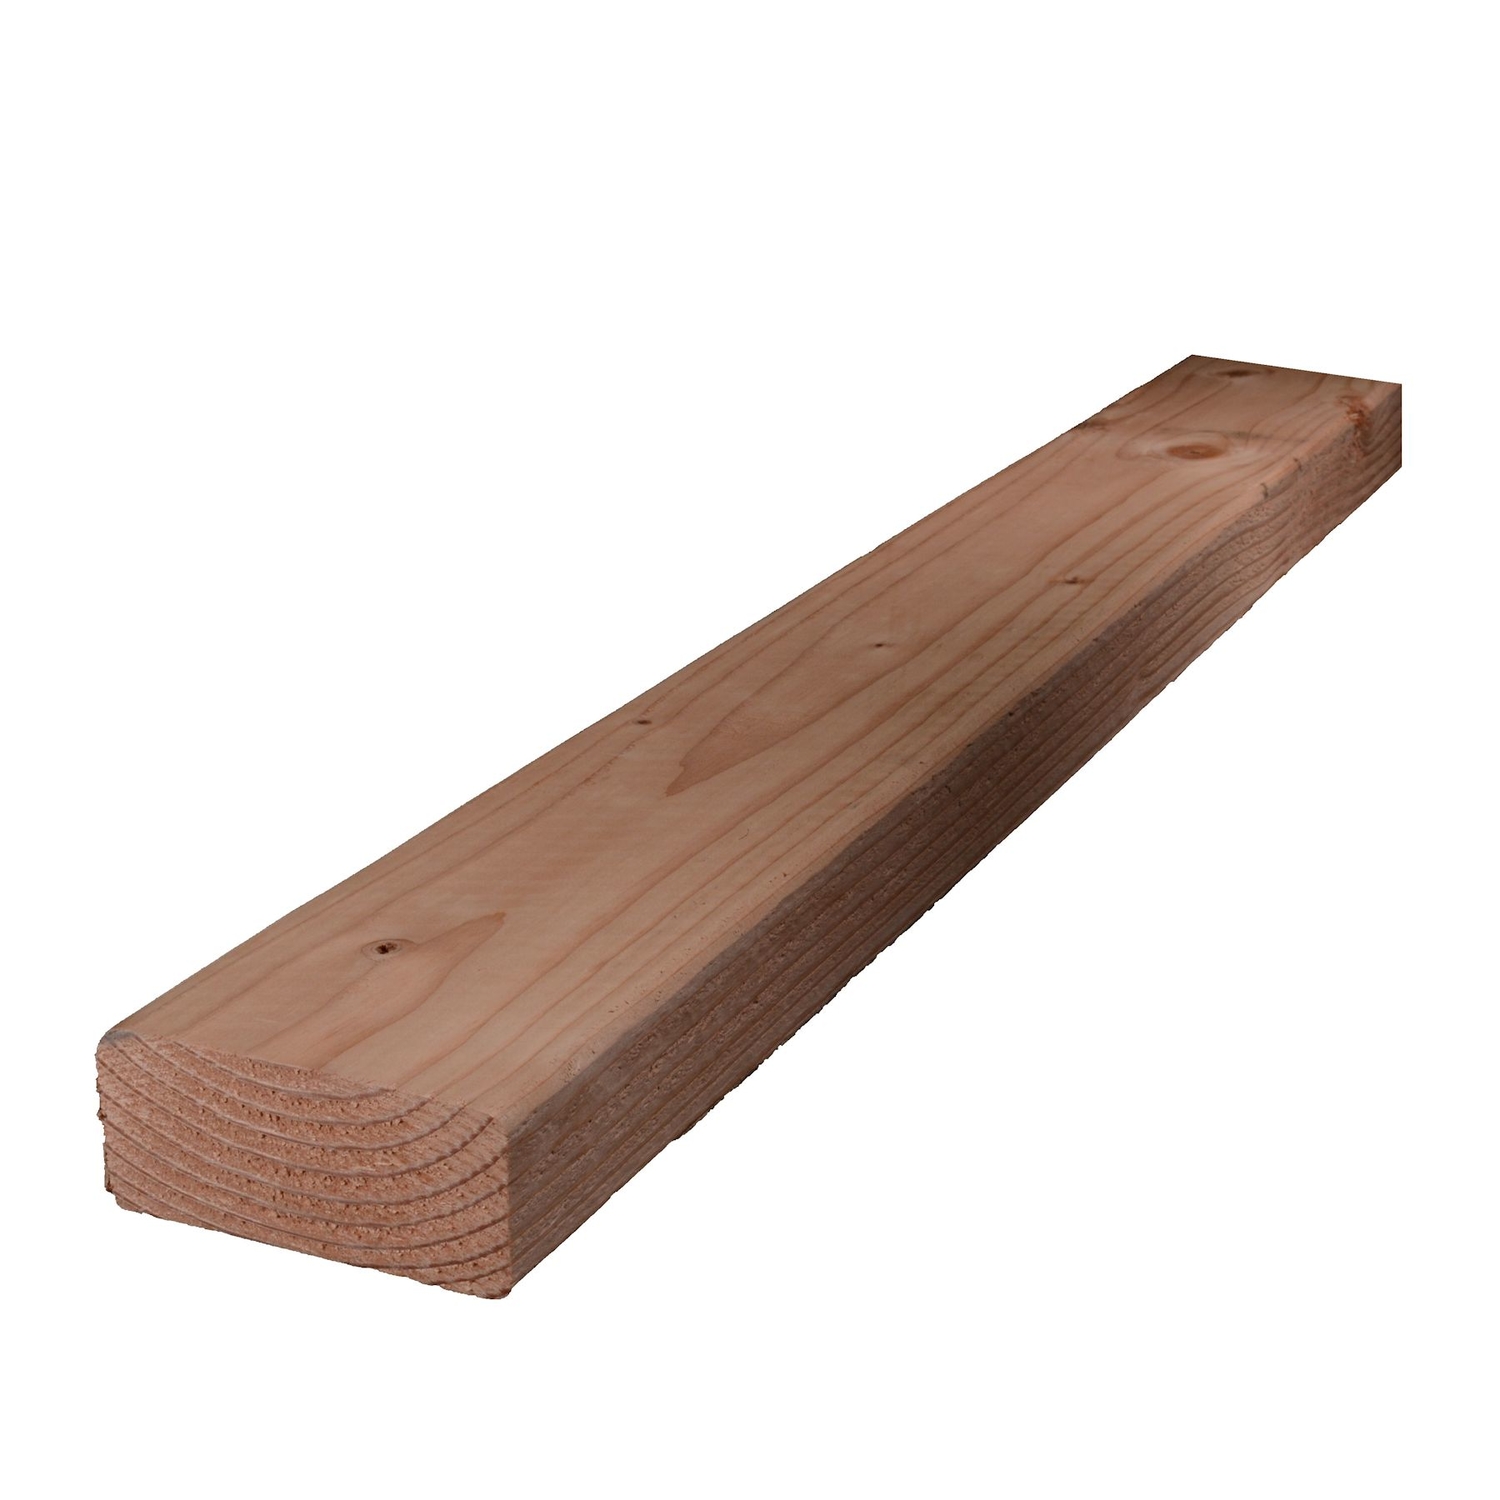 CedarSafe FL60/15N Closet Liner Plank, 3-3/4 in W, Cedar